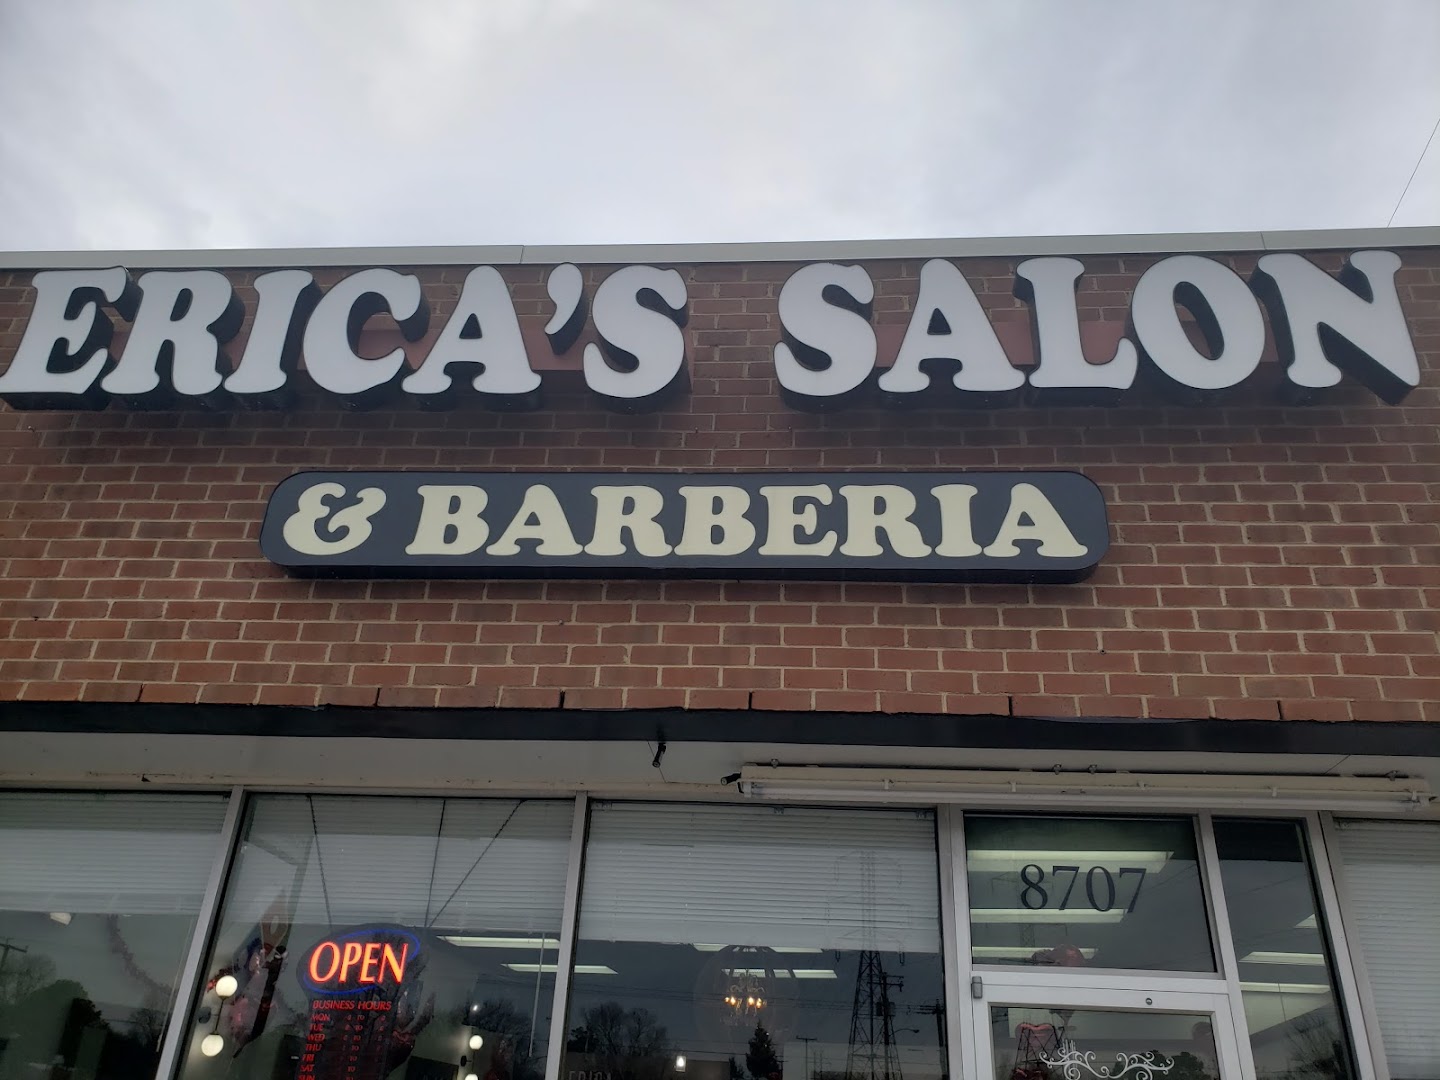 Erica salon & barbershop